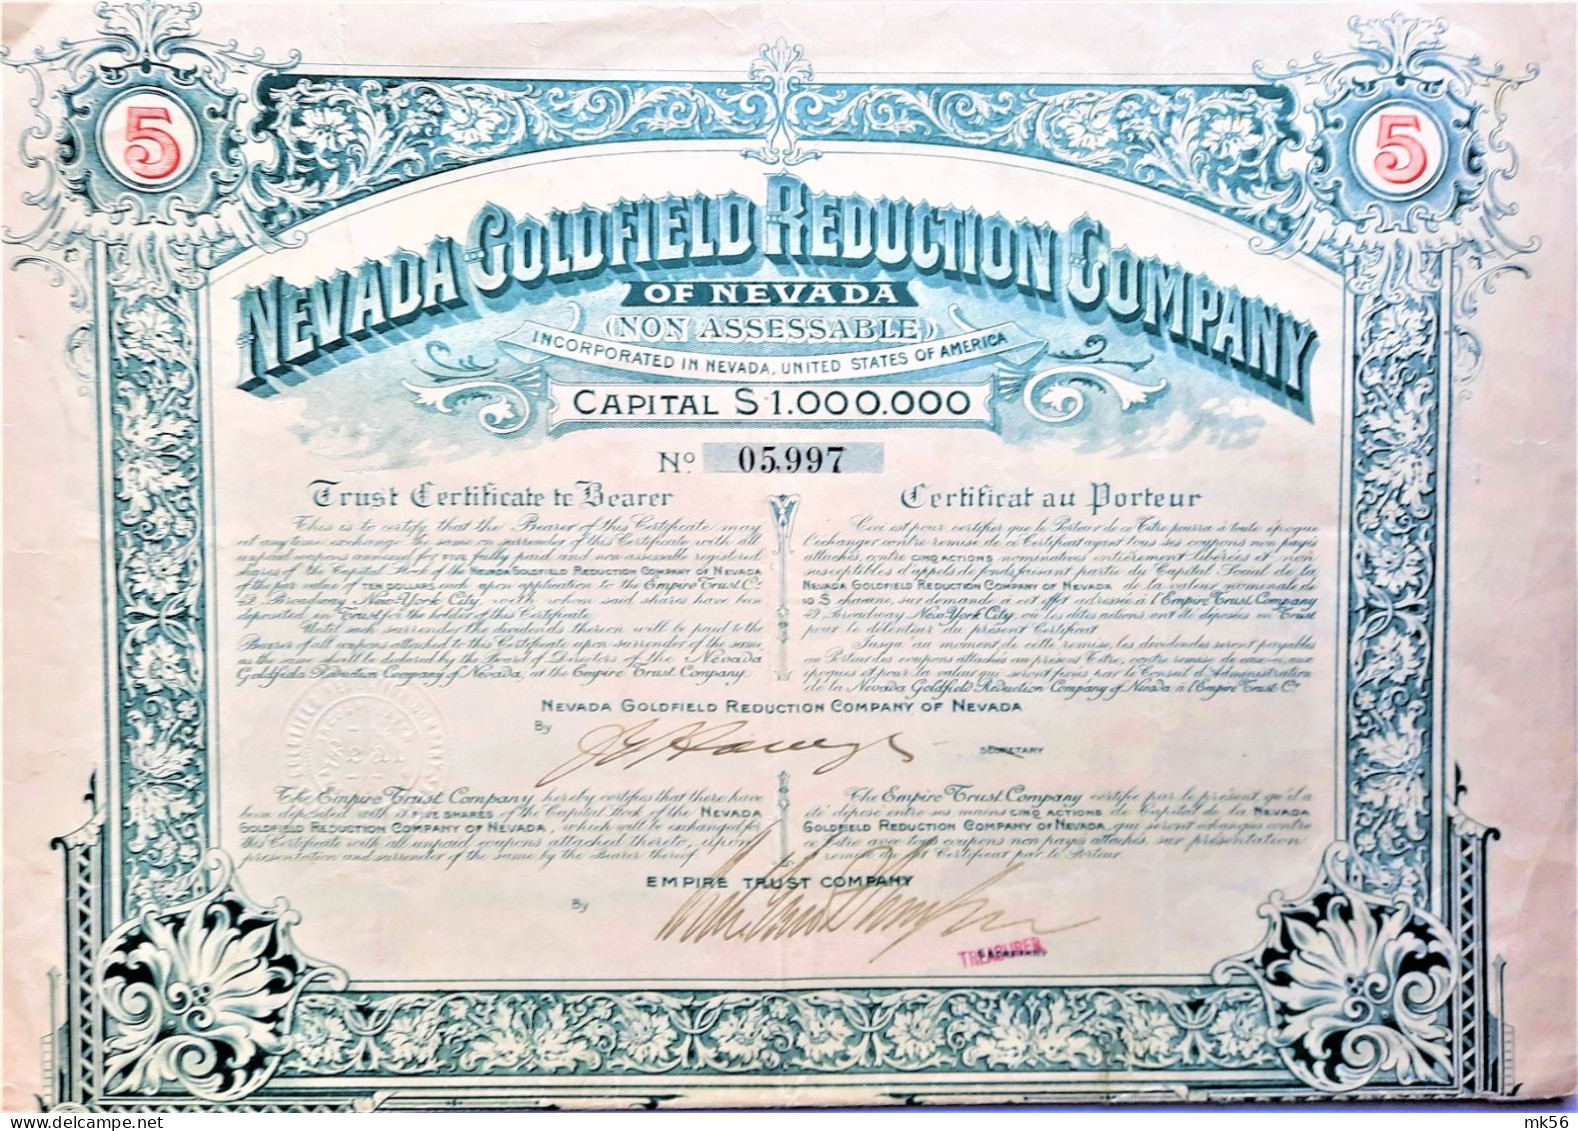 Nevada Goldfield Reduction Company (1910) - Mines